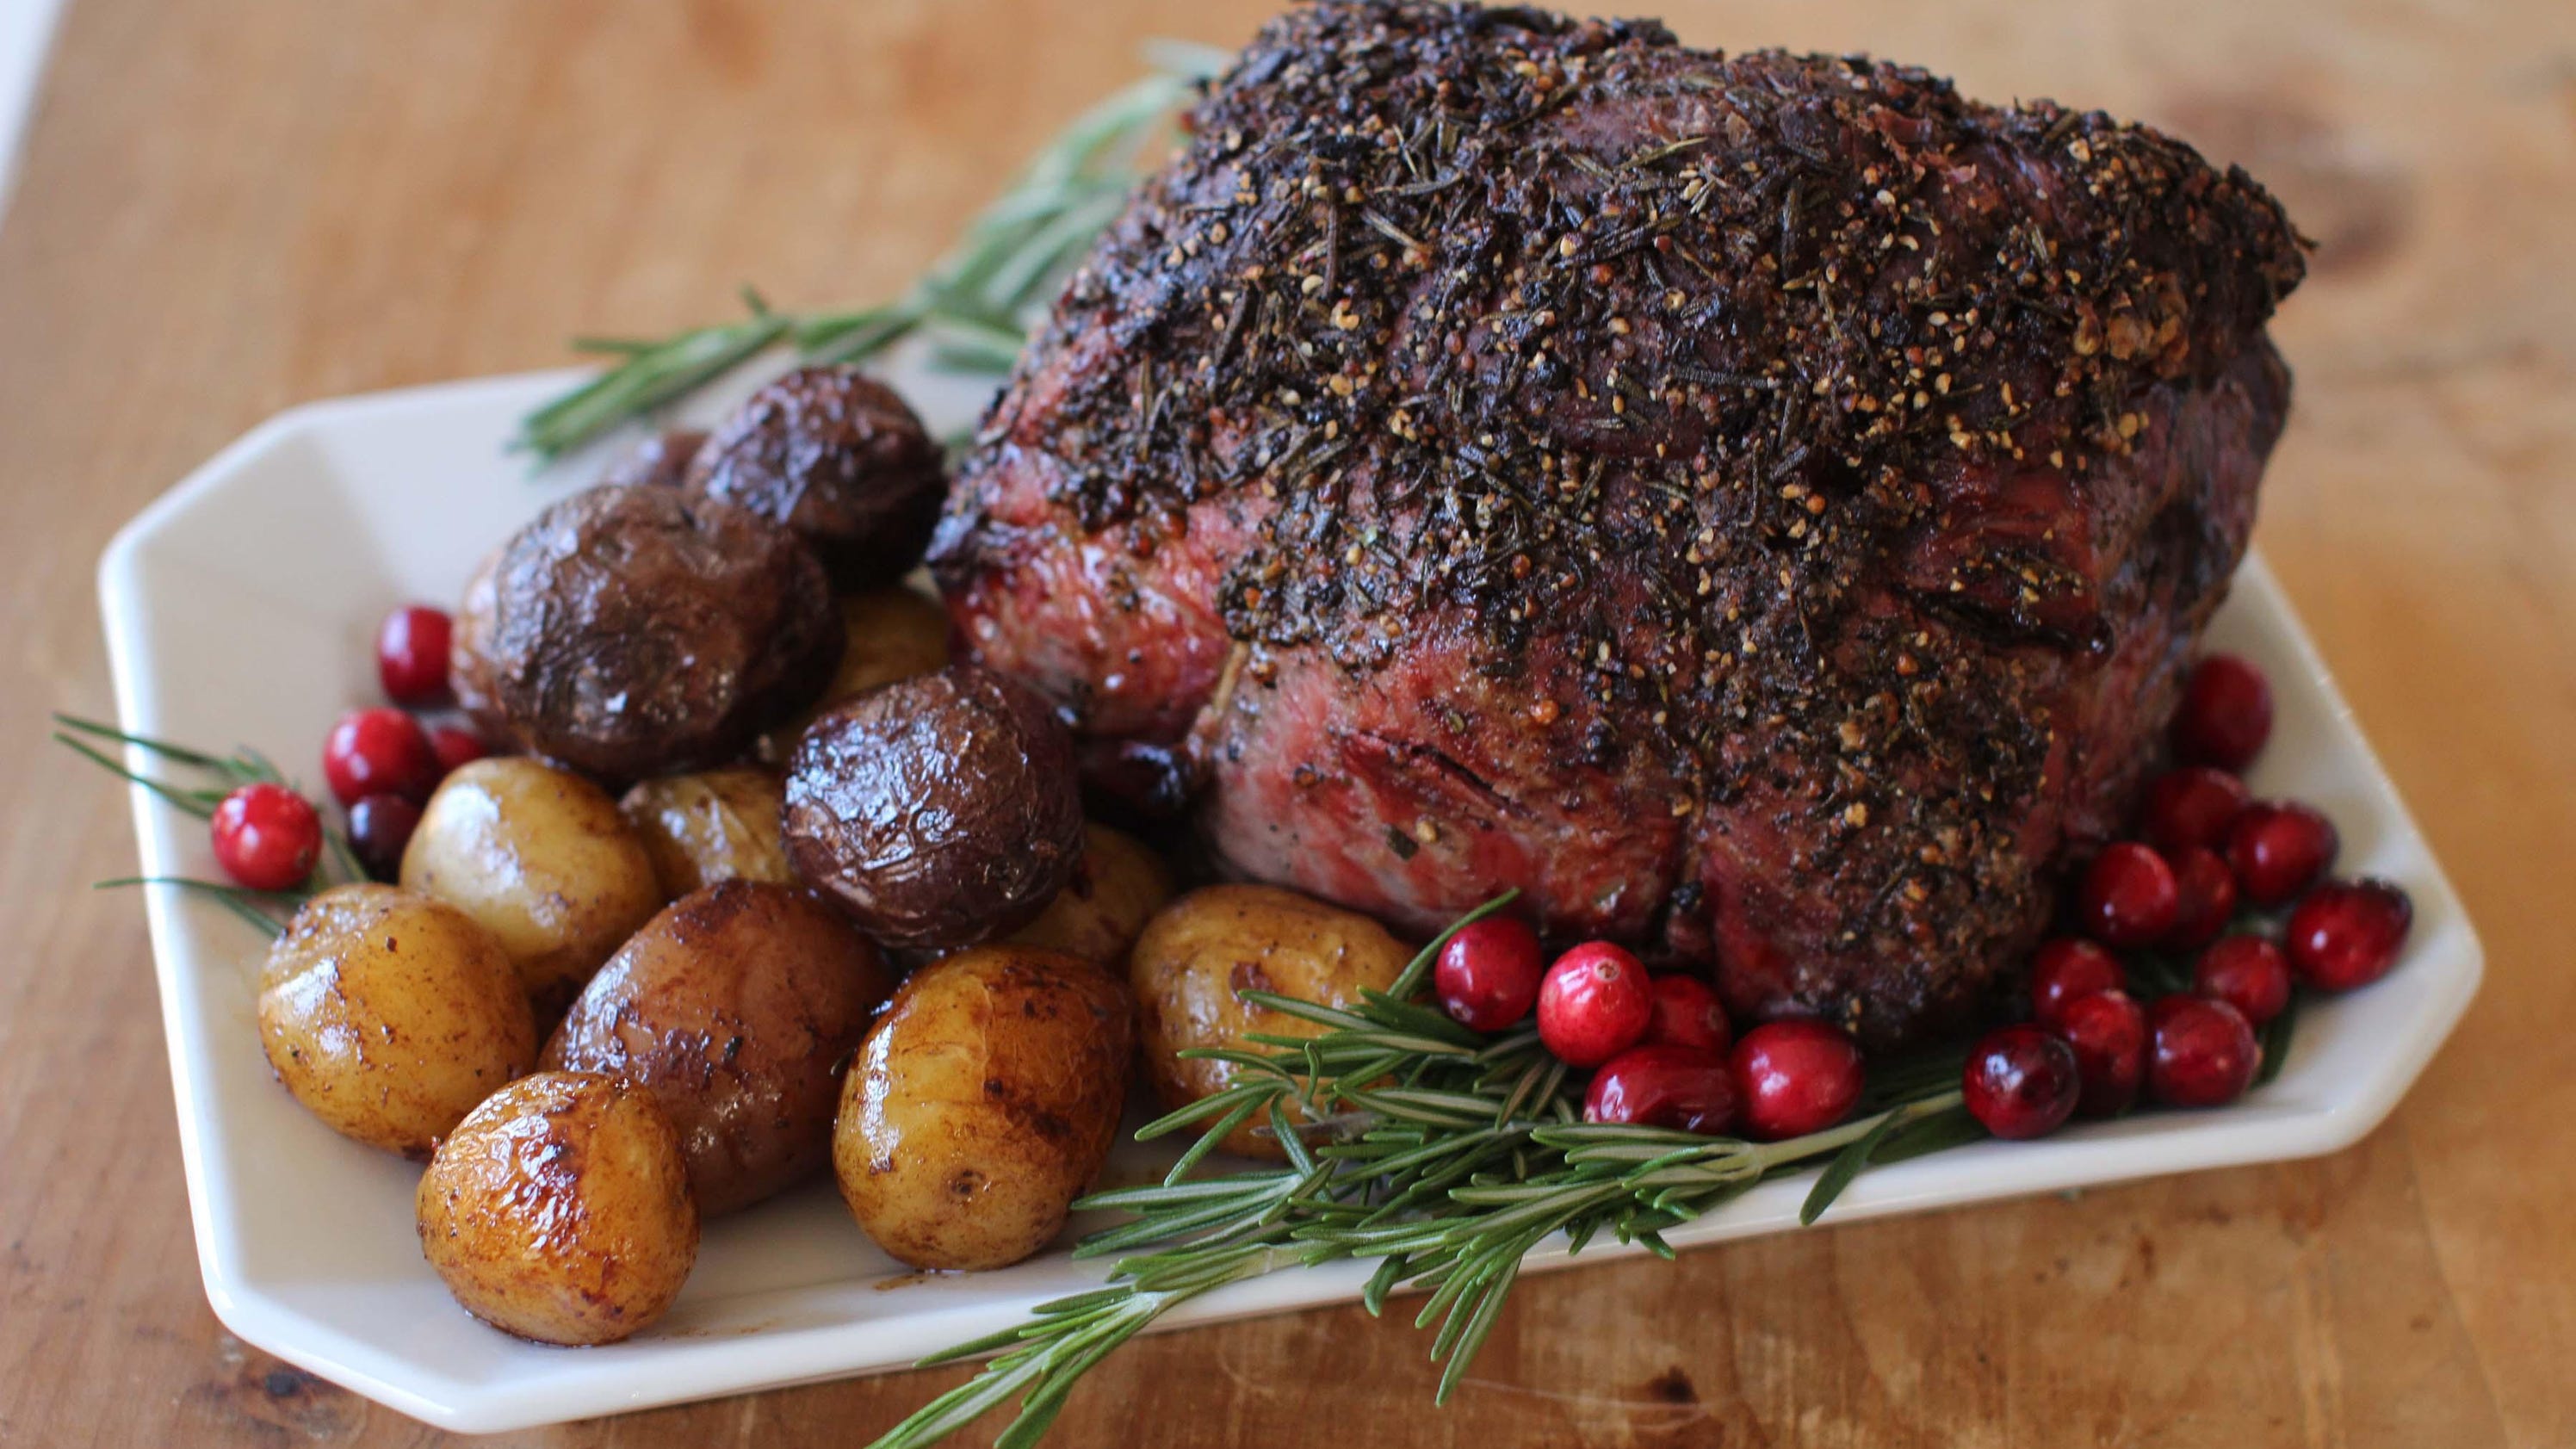 Want an easy, festive Christmas dinner? You want beef roast